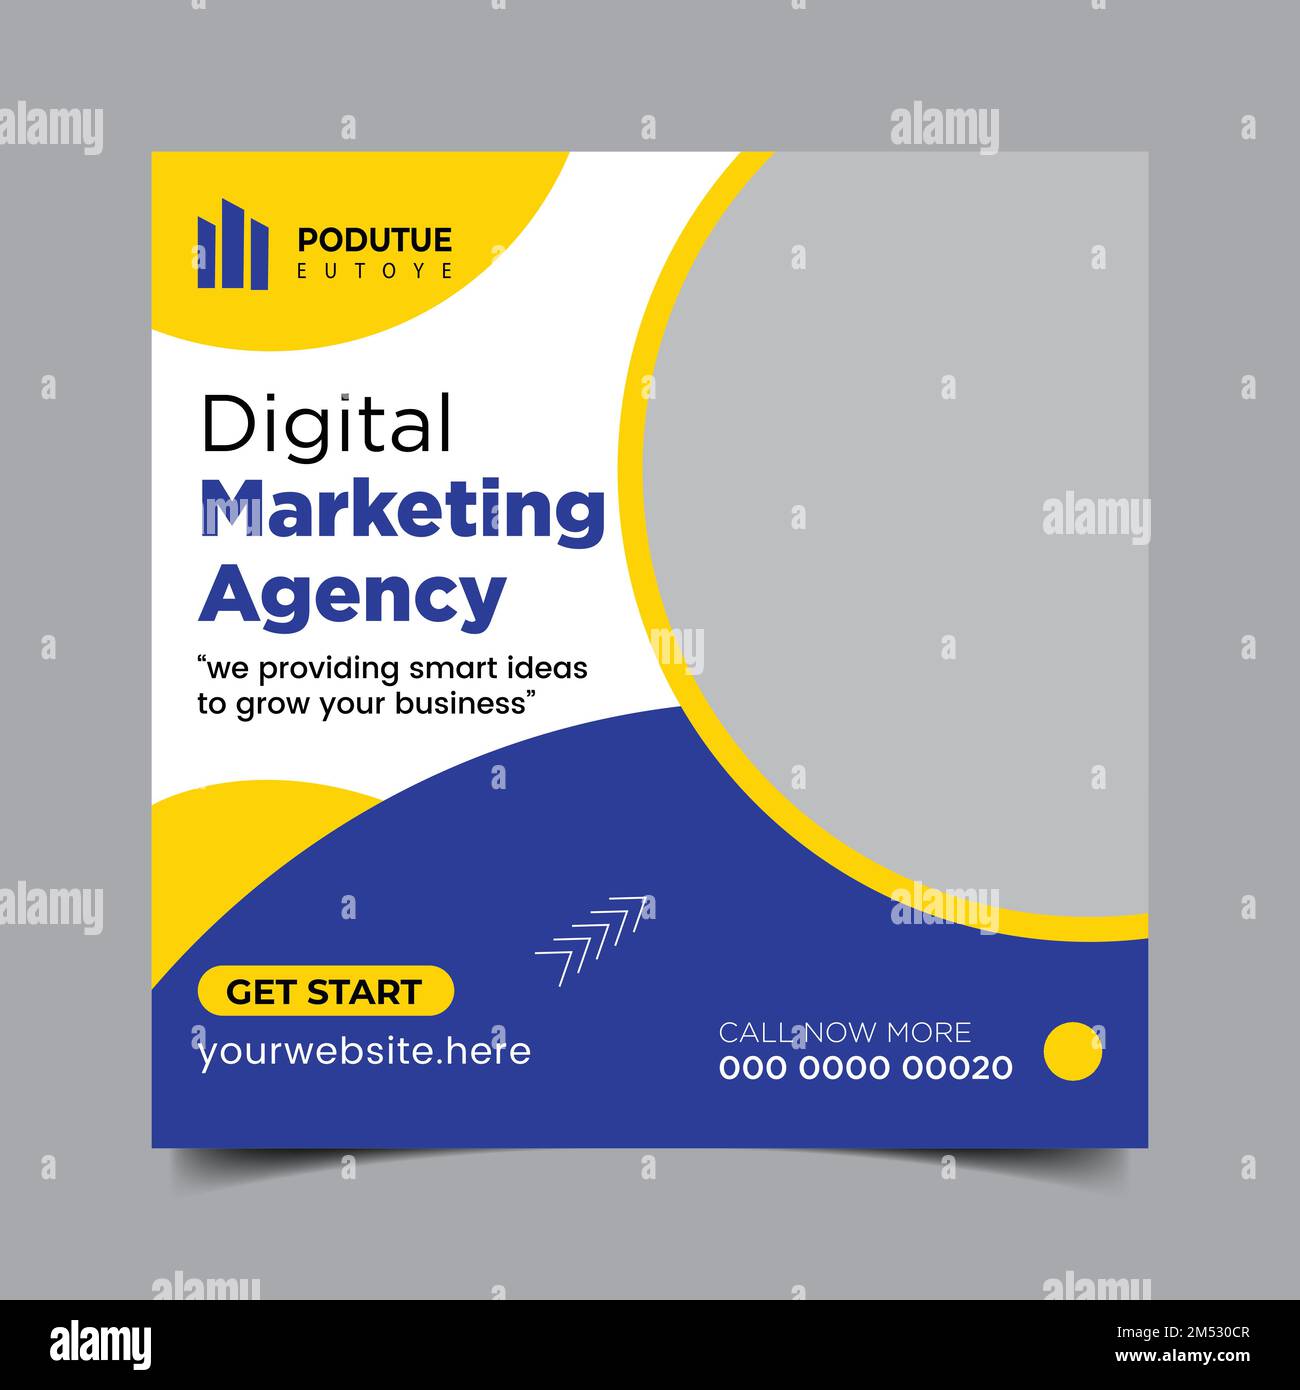 Digital marketing agency social media post design and web banner template. Stock Vector